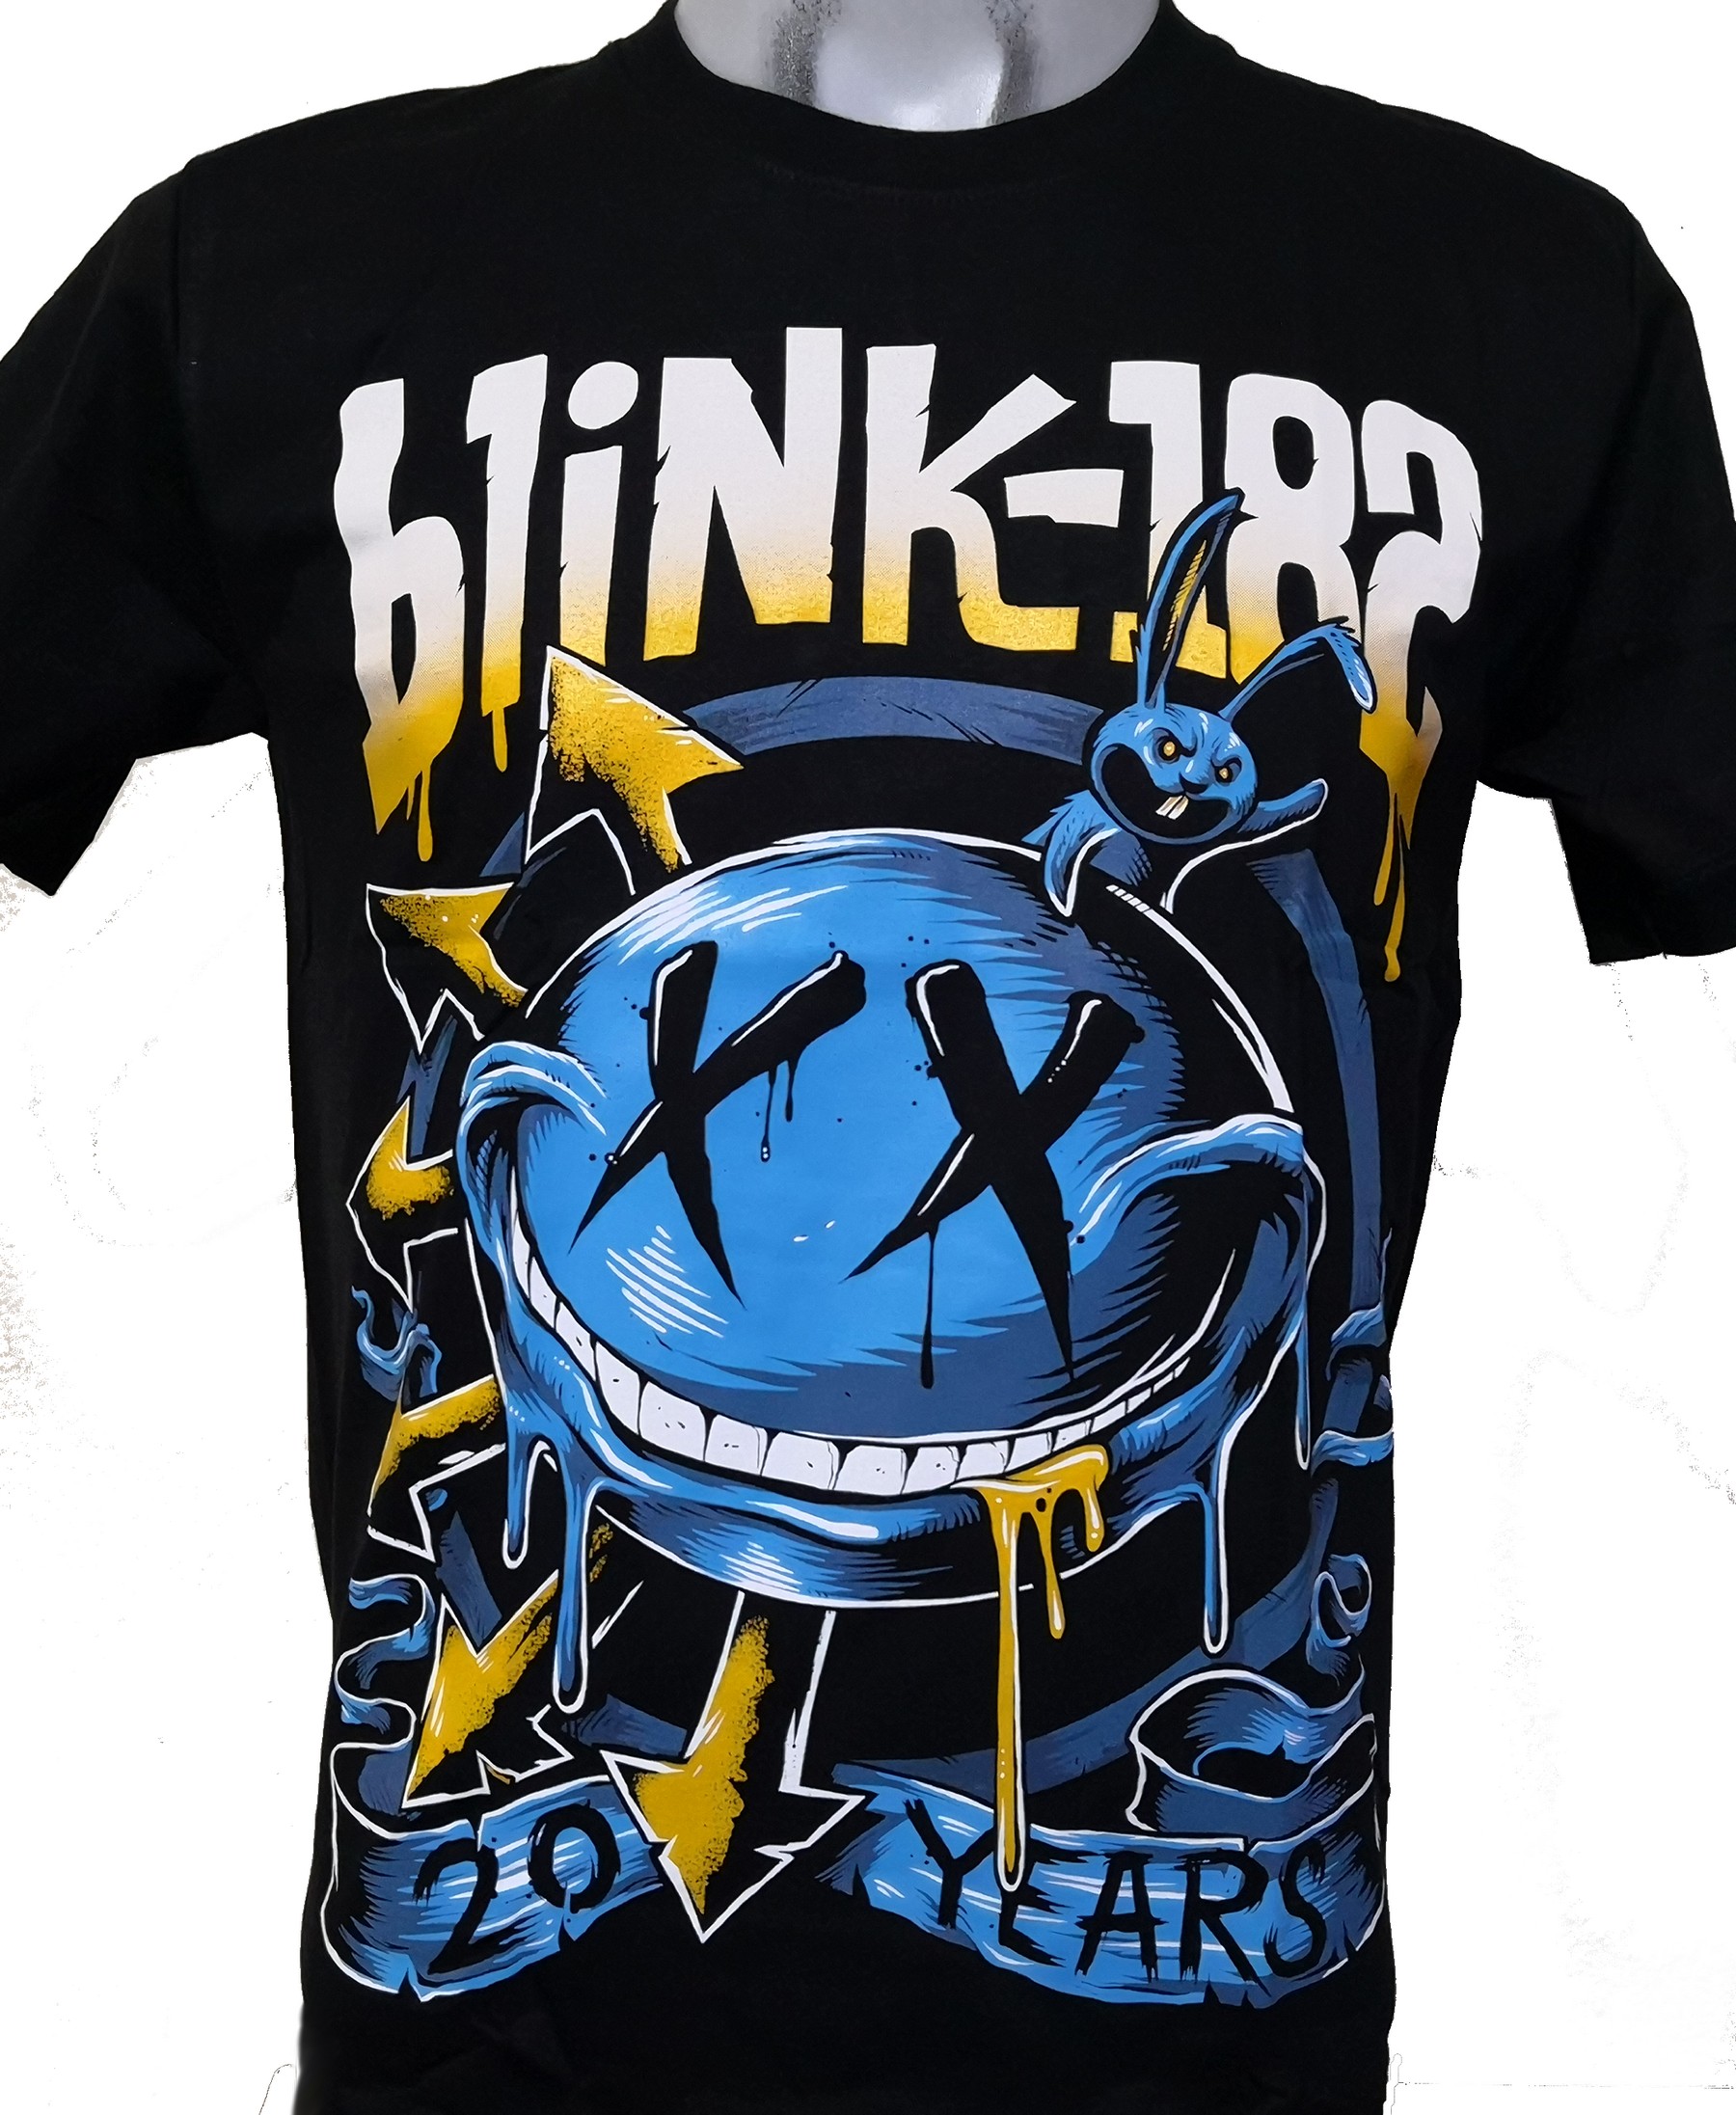 Blink-182 t-shirt size M – RoxxBKK